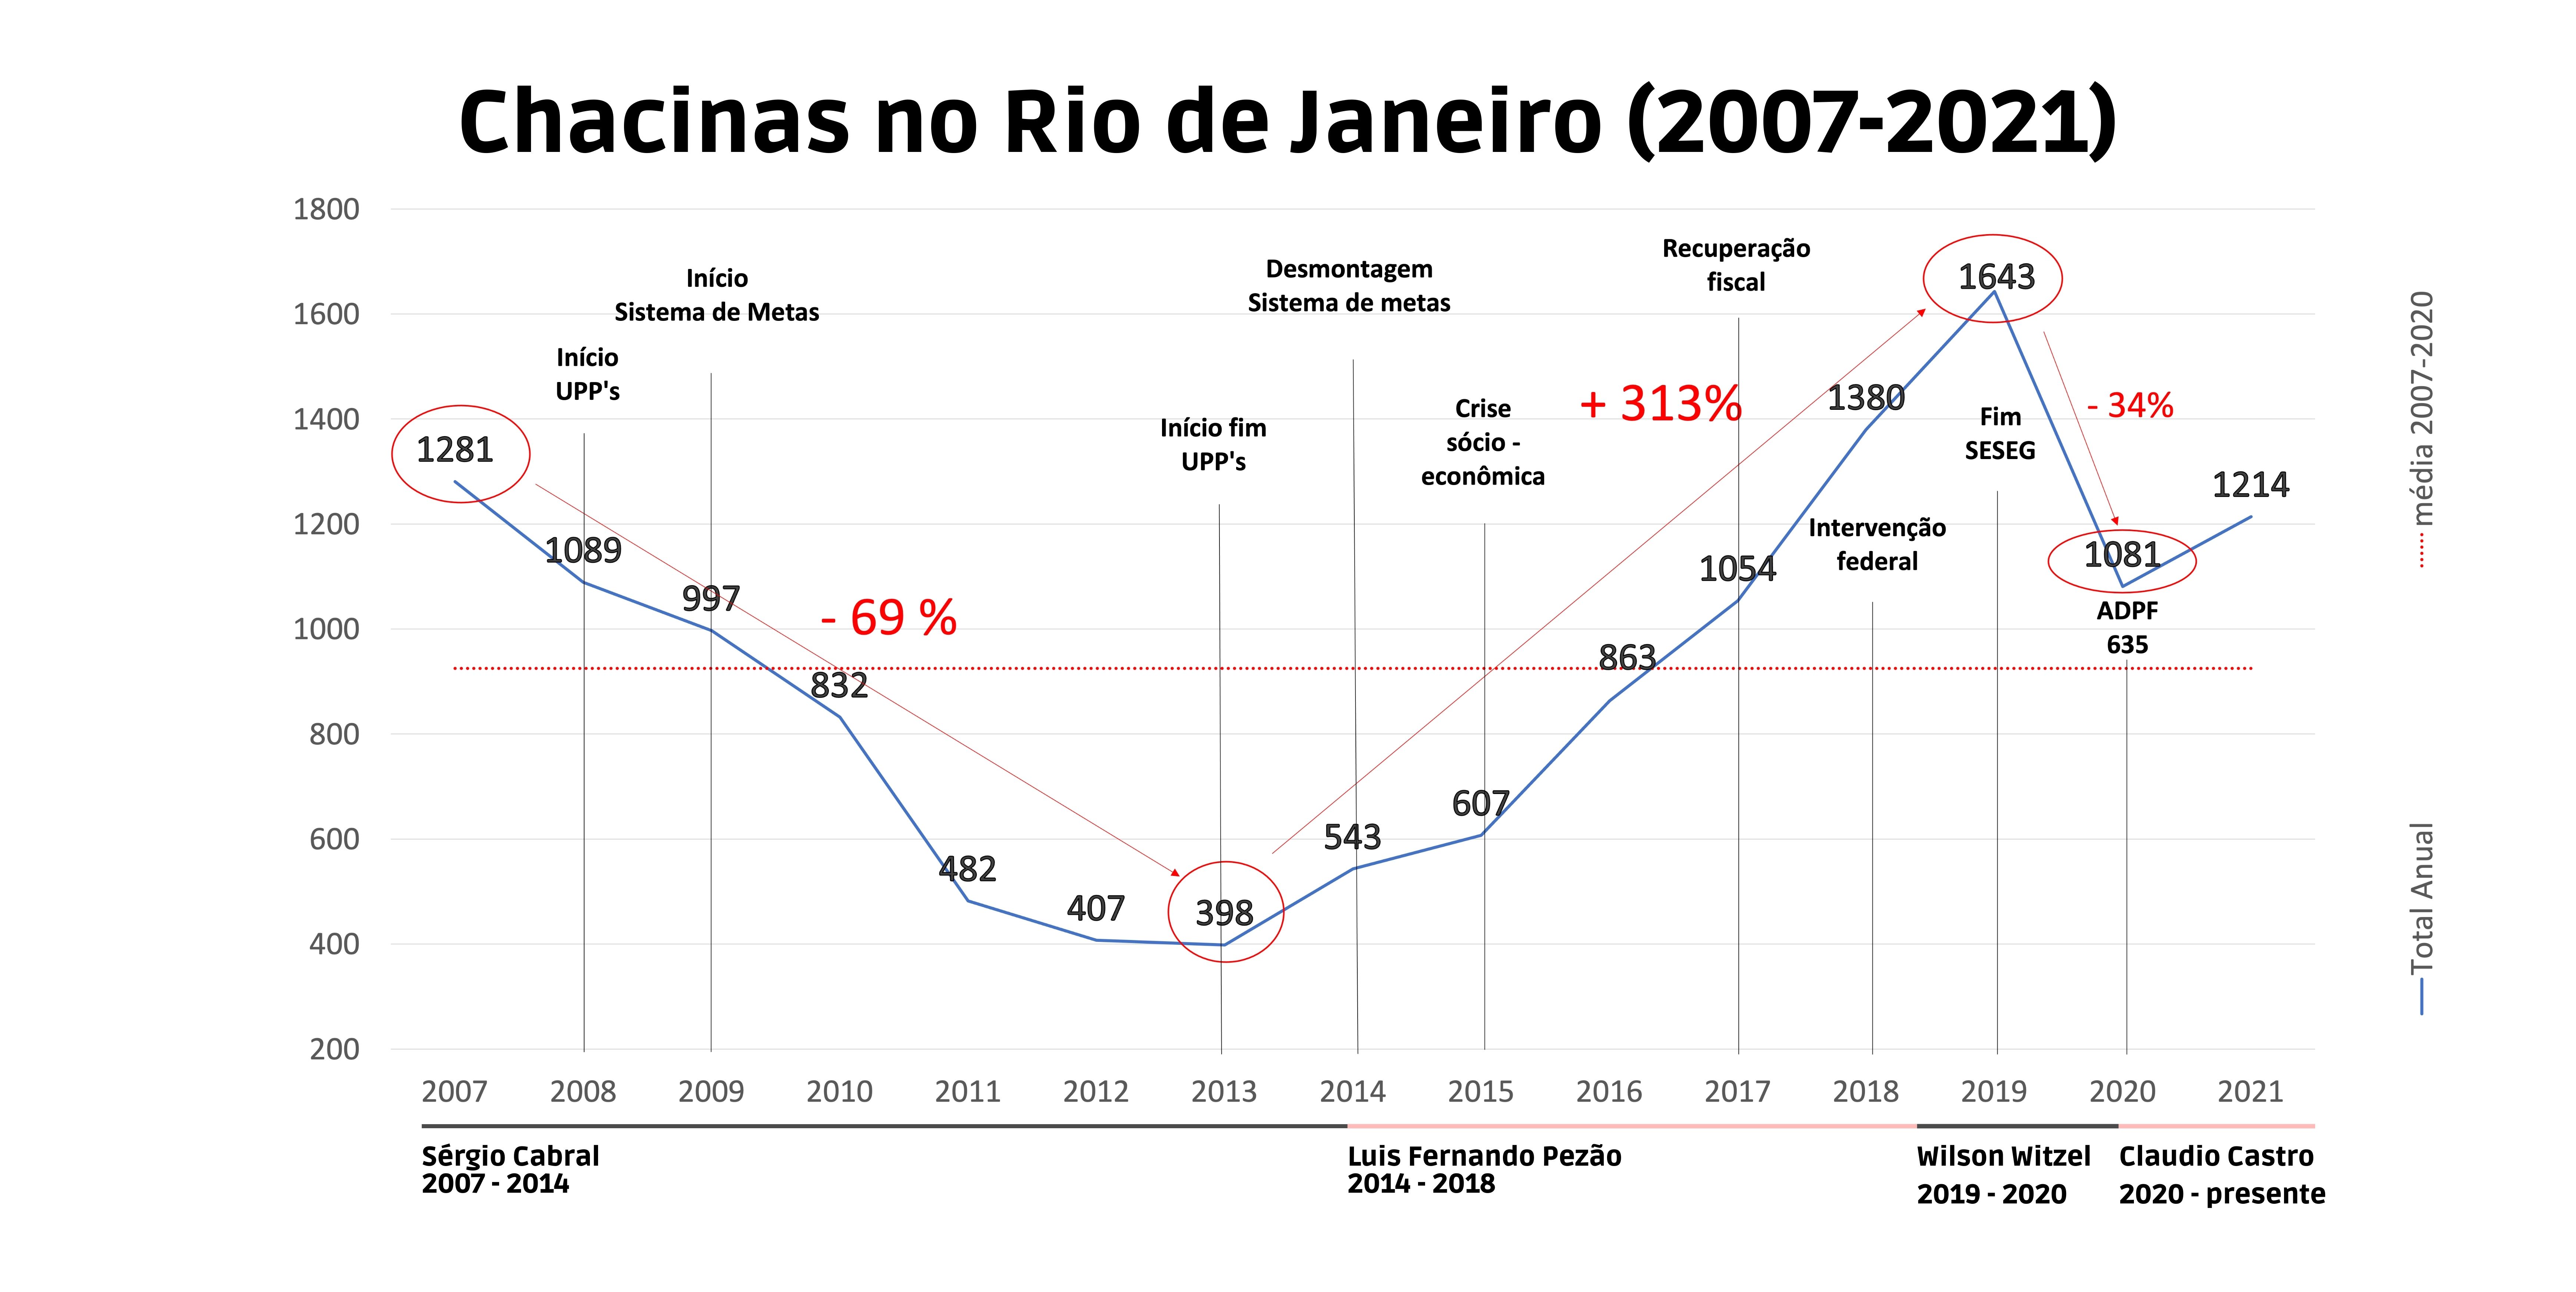 Chacinas no Rio de Janeiro (2007-2021).jpg